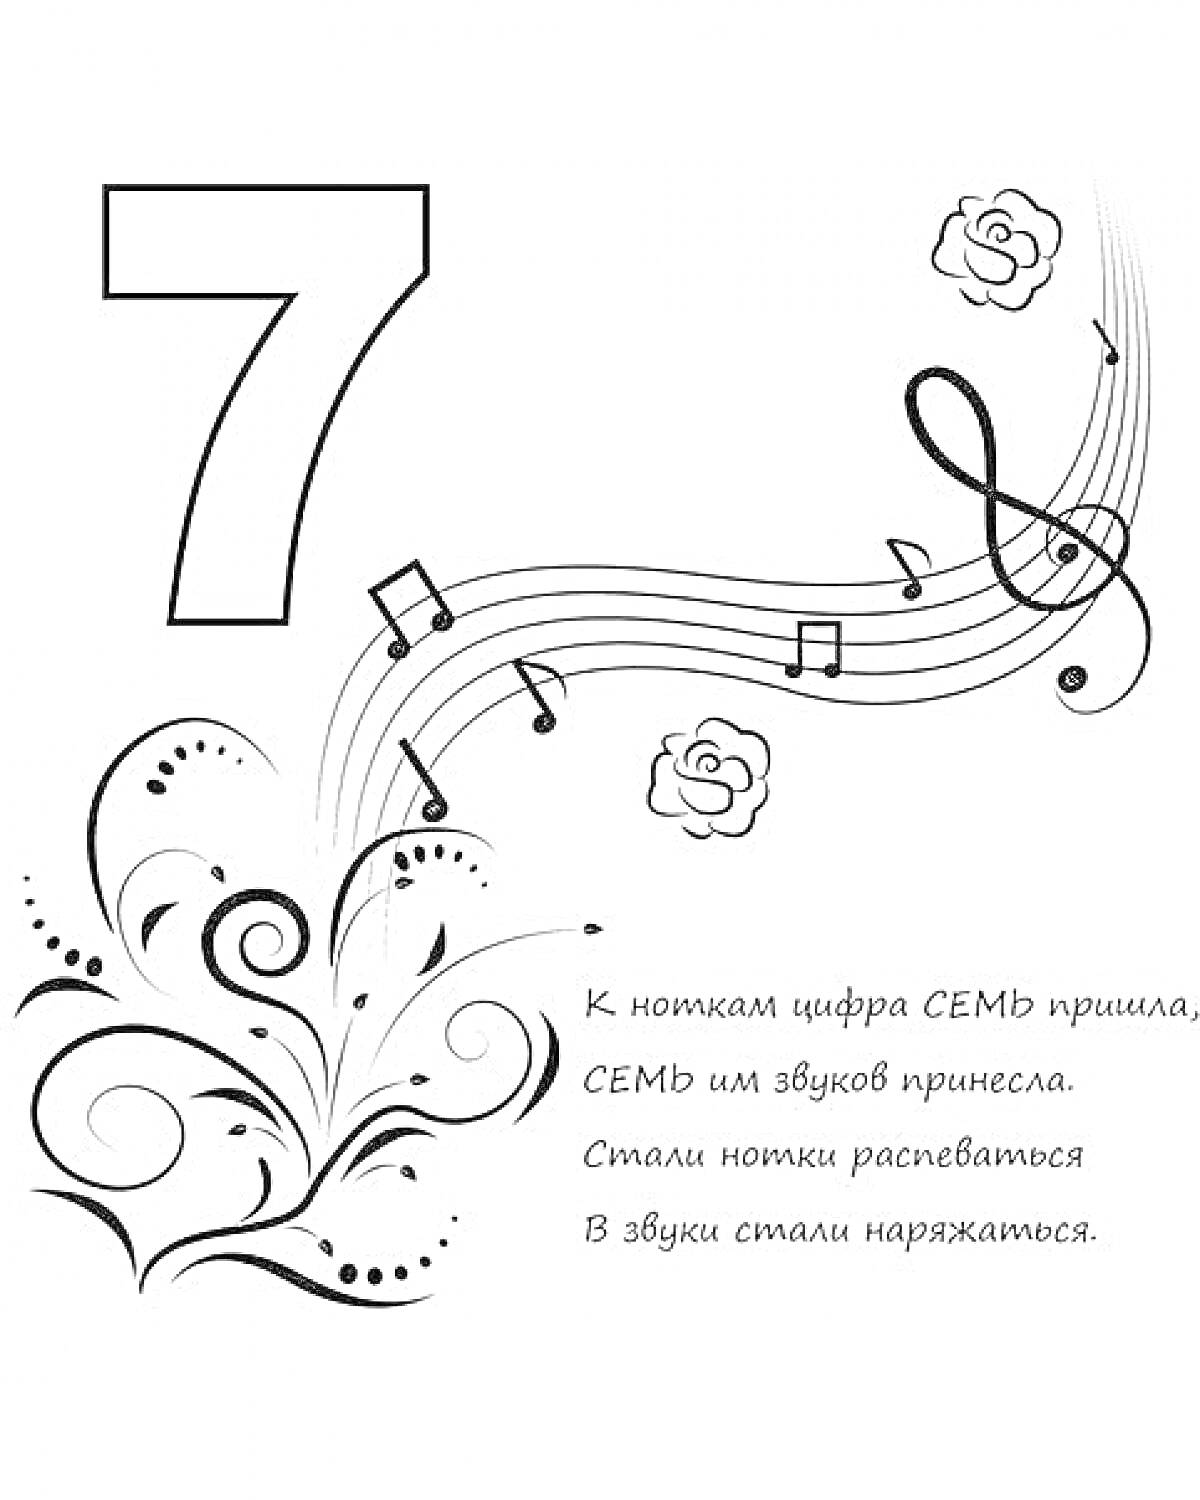 Цифра 7, музыкальные ноты, цветы и текст 